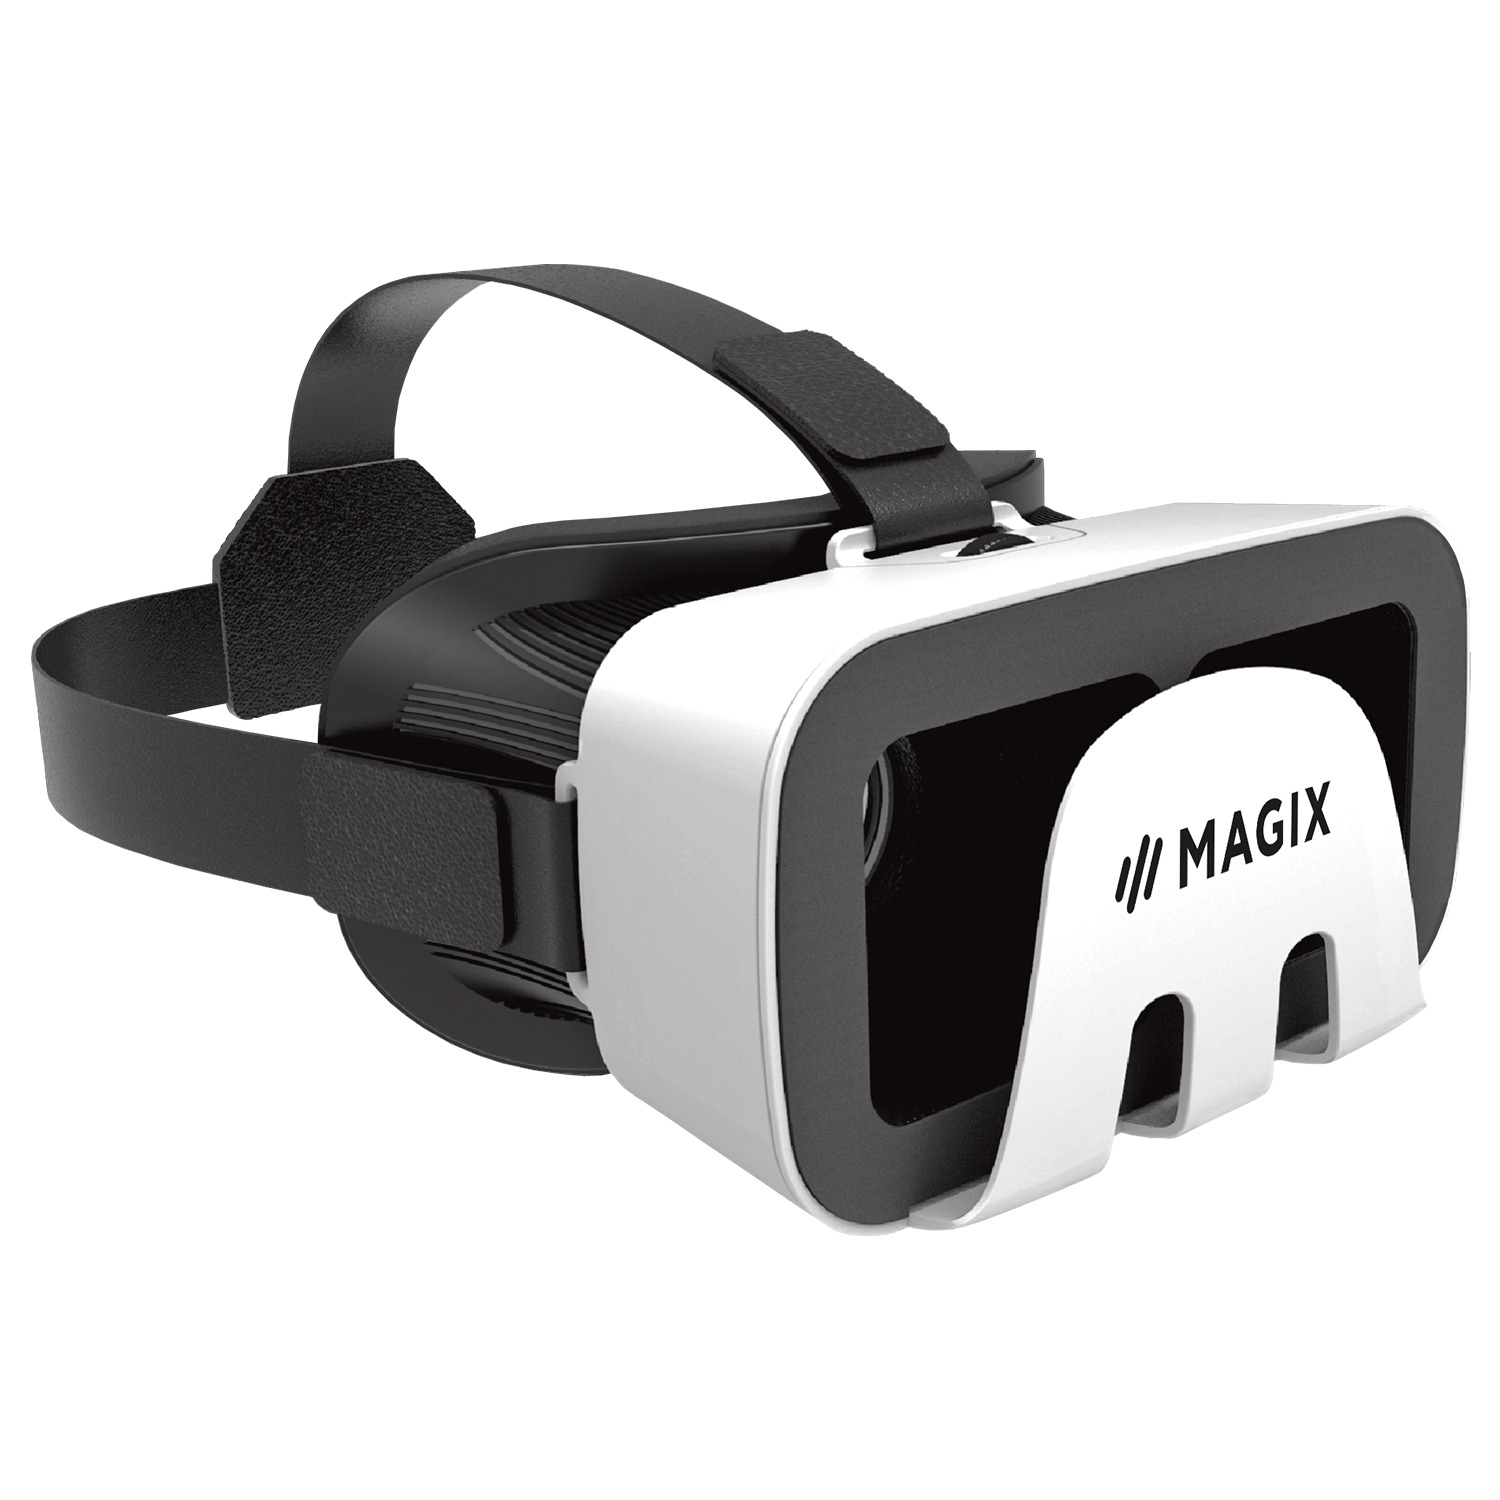 MAGIX 3D Virtual Reality Brille Headset kompatibel mit iOS Android [1 Stück]